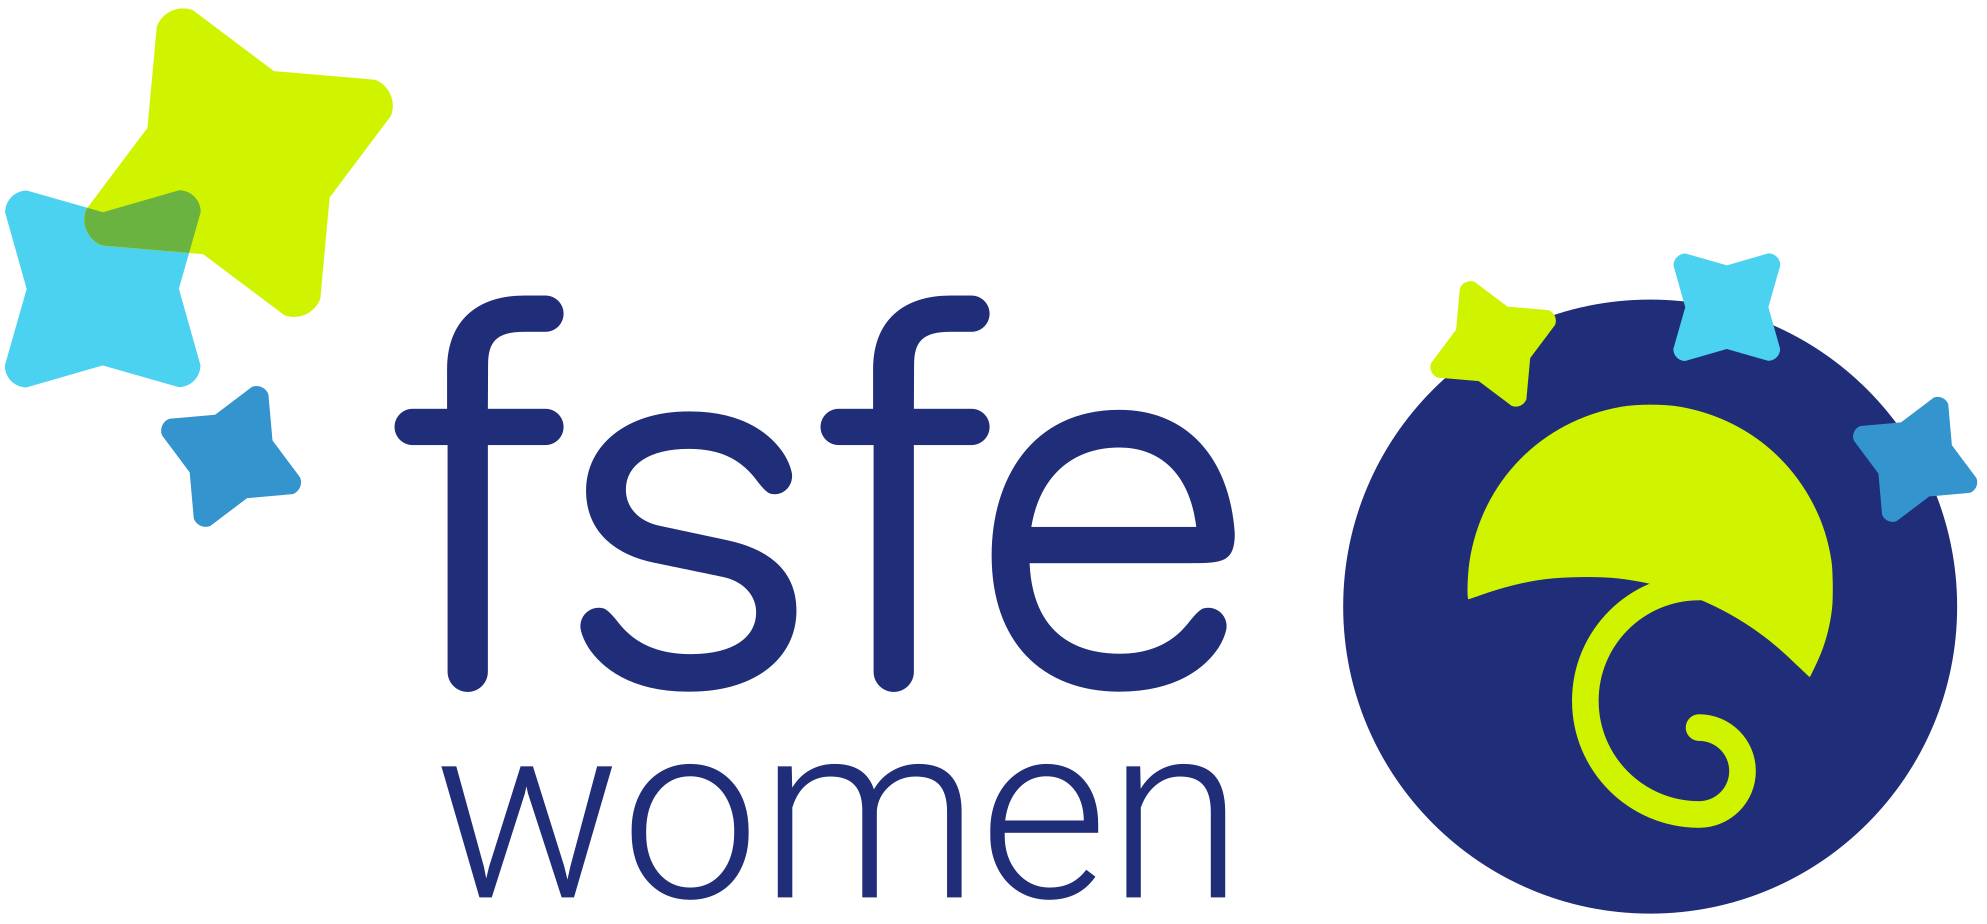 fsfe_women_logo_font.png